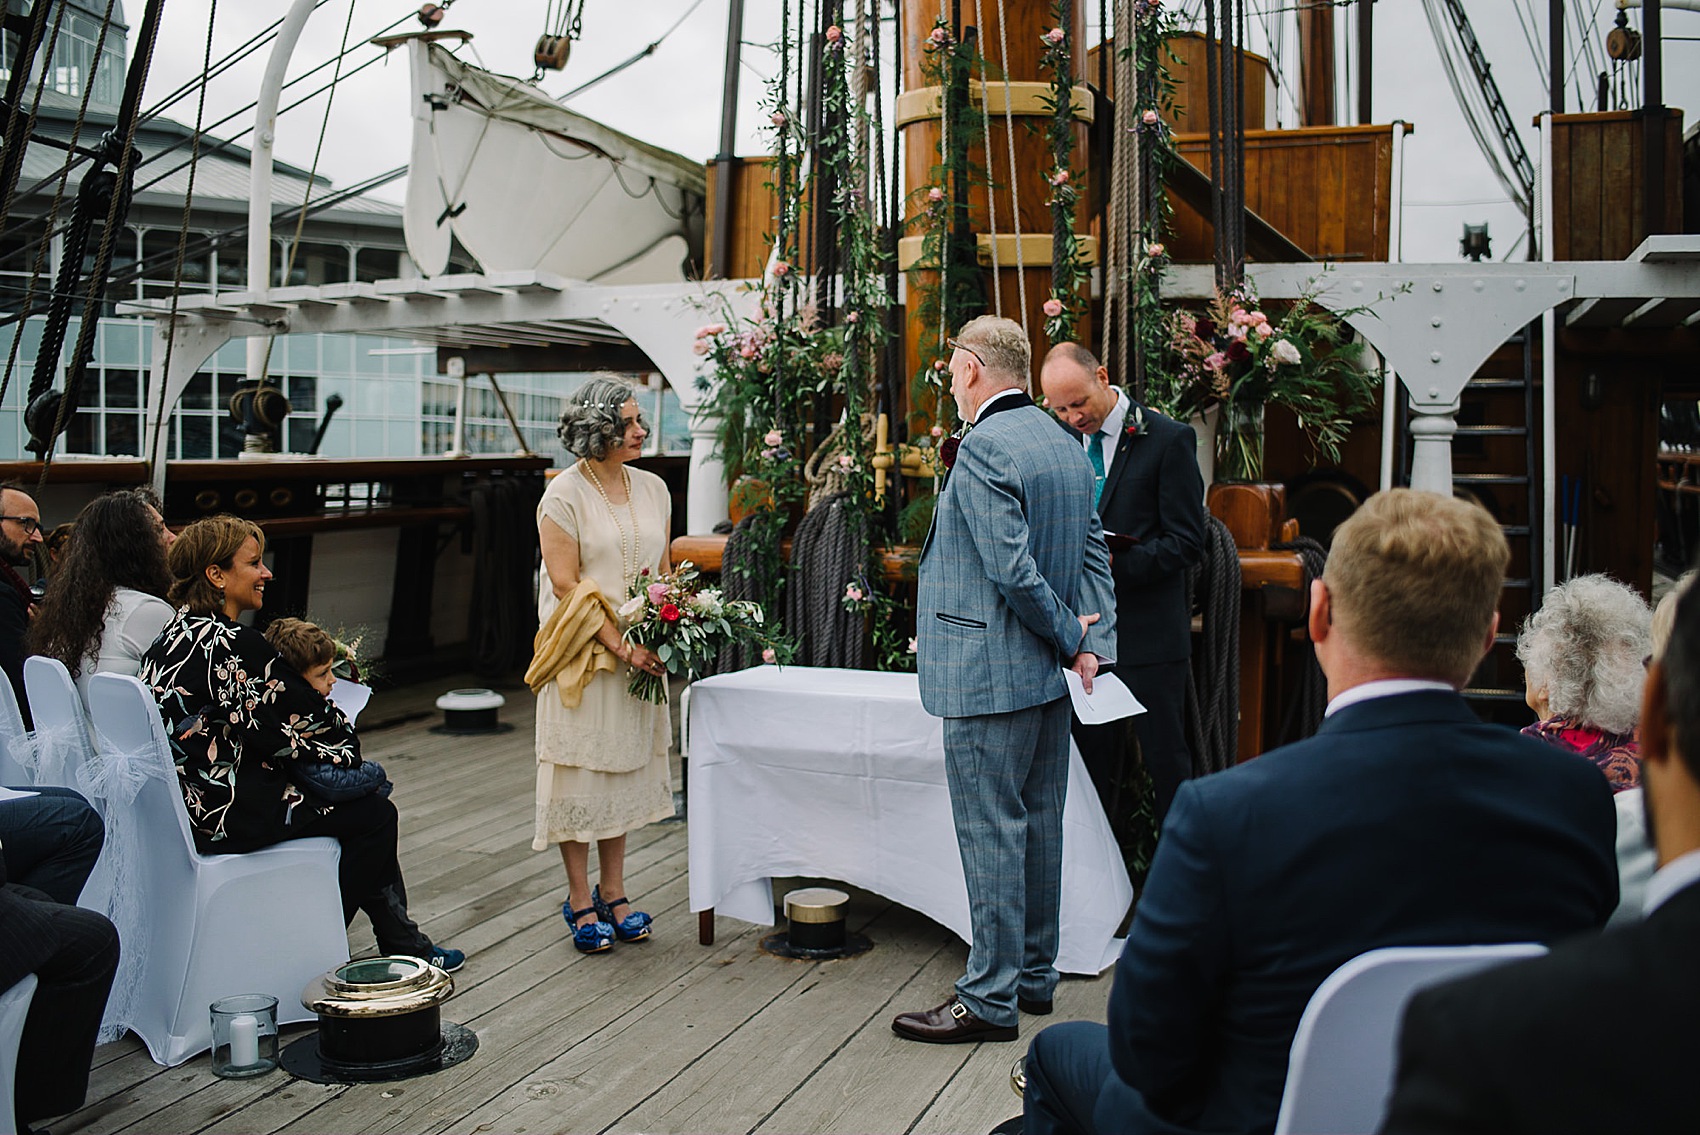 Wedding on a boat 1920s vintage dress 22